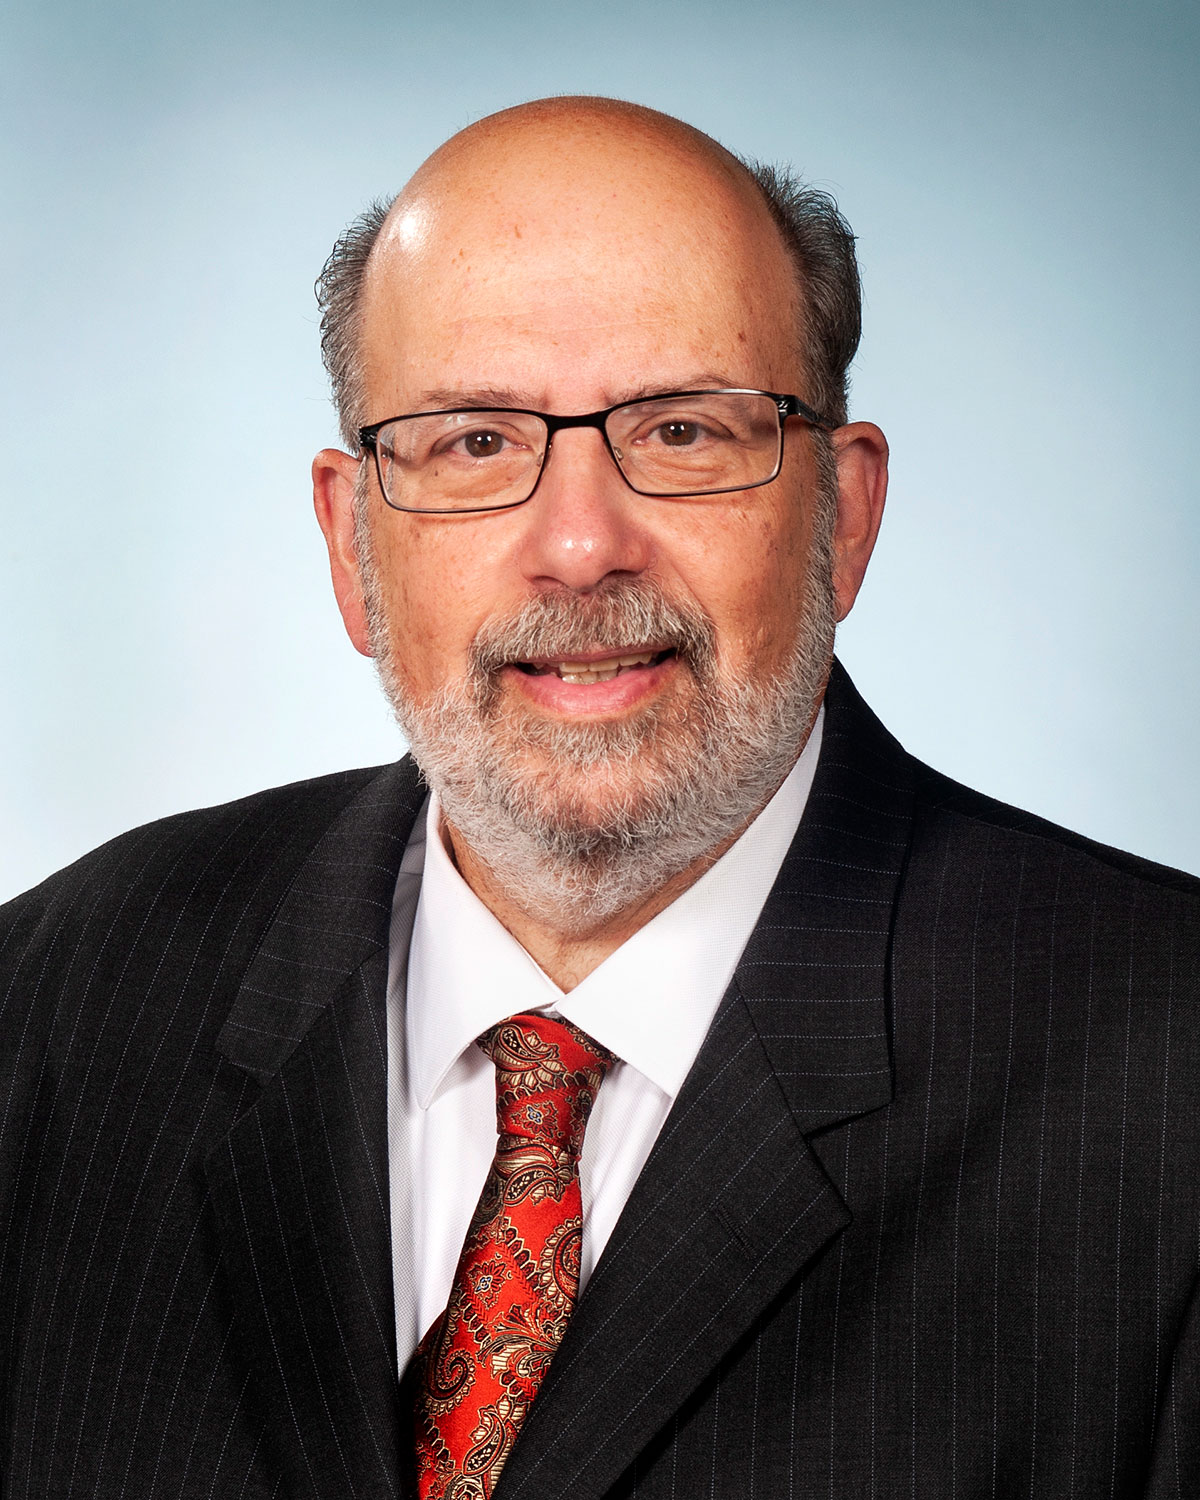 Professional headshot photograph of Robert DiTomasso, PhD, ABPP